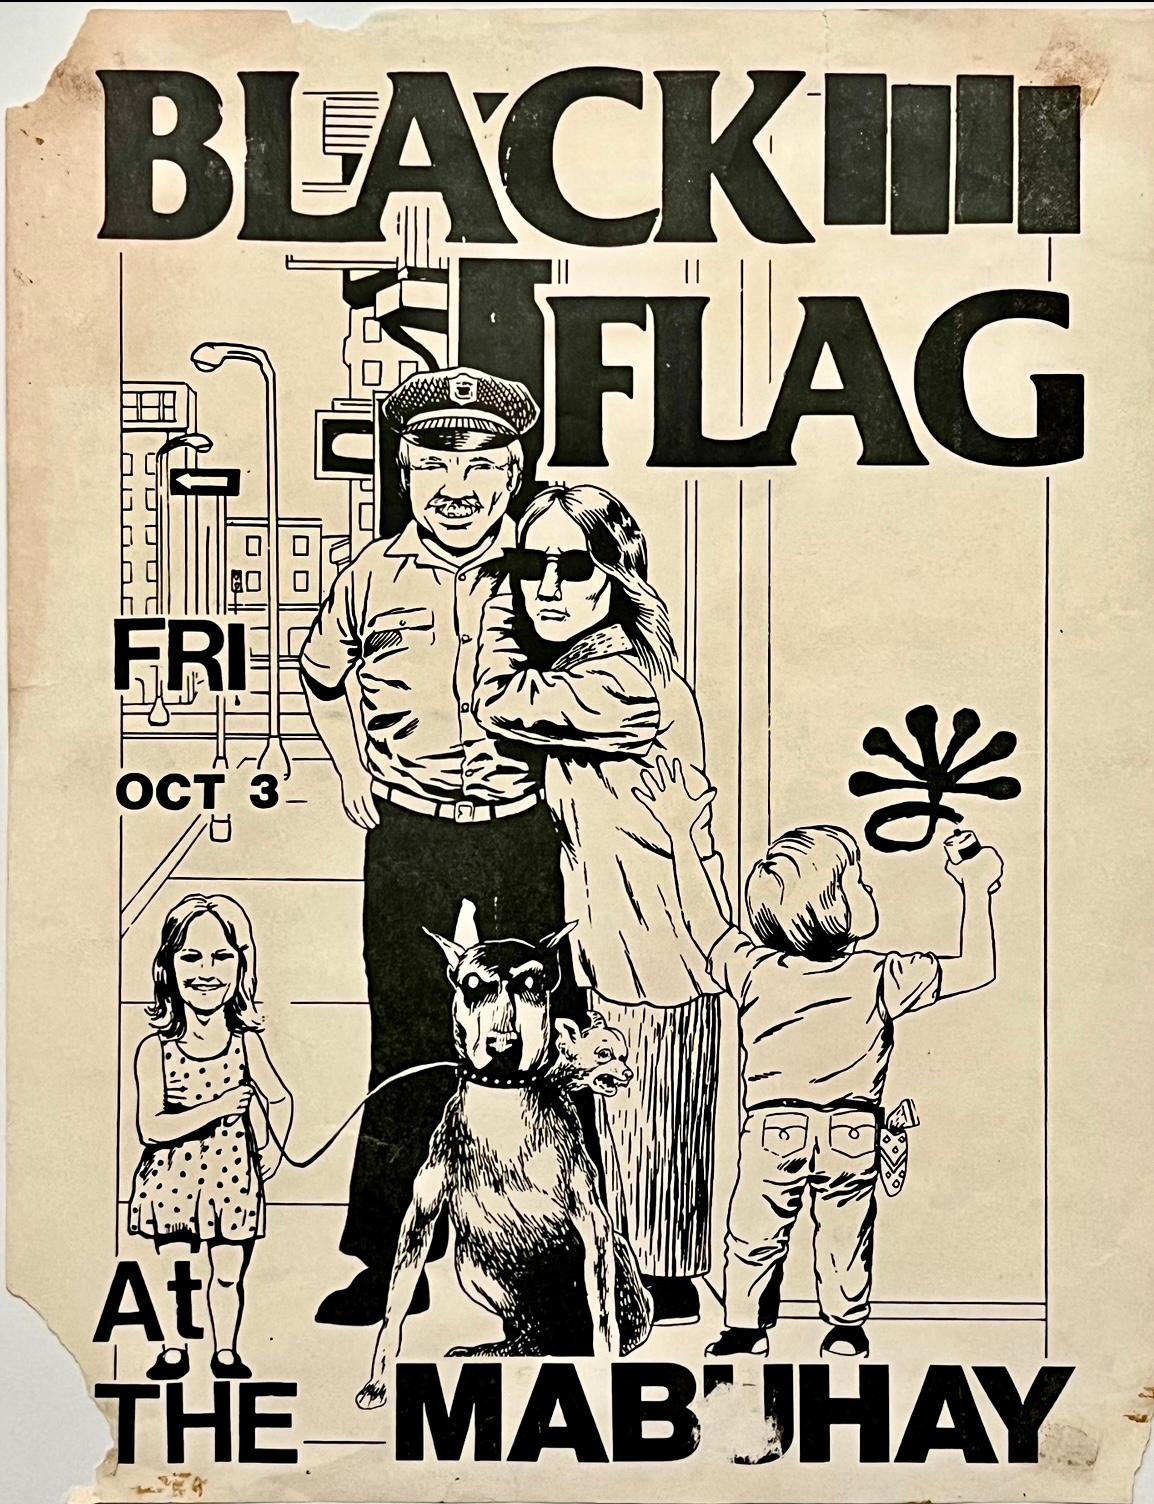 Raymond Pettibon: Rare early Black Flag flyer:
Original punk flyer / handbill illustrated by Raymond Pettibon for a gig by Black Flag at The Mabuhay, San Francisco, CA: Fri Oct 3, 1980. 

Offset-printed 11 x 8 ½ inches (28 x 21.6 cm). 
Fair overall